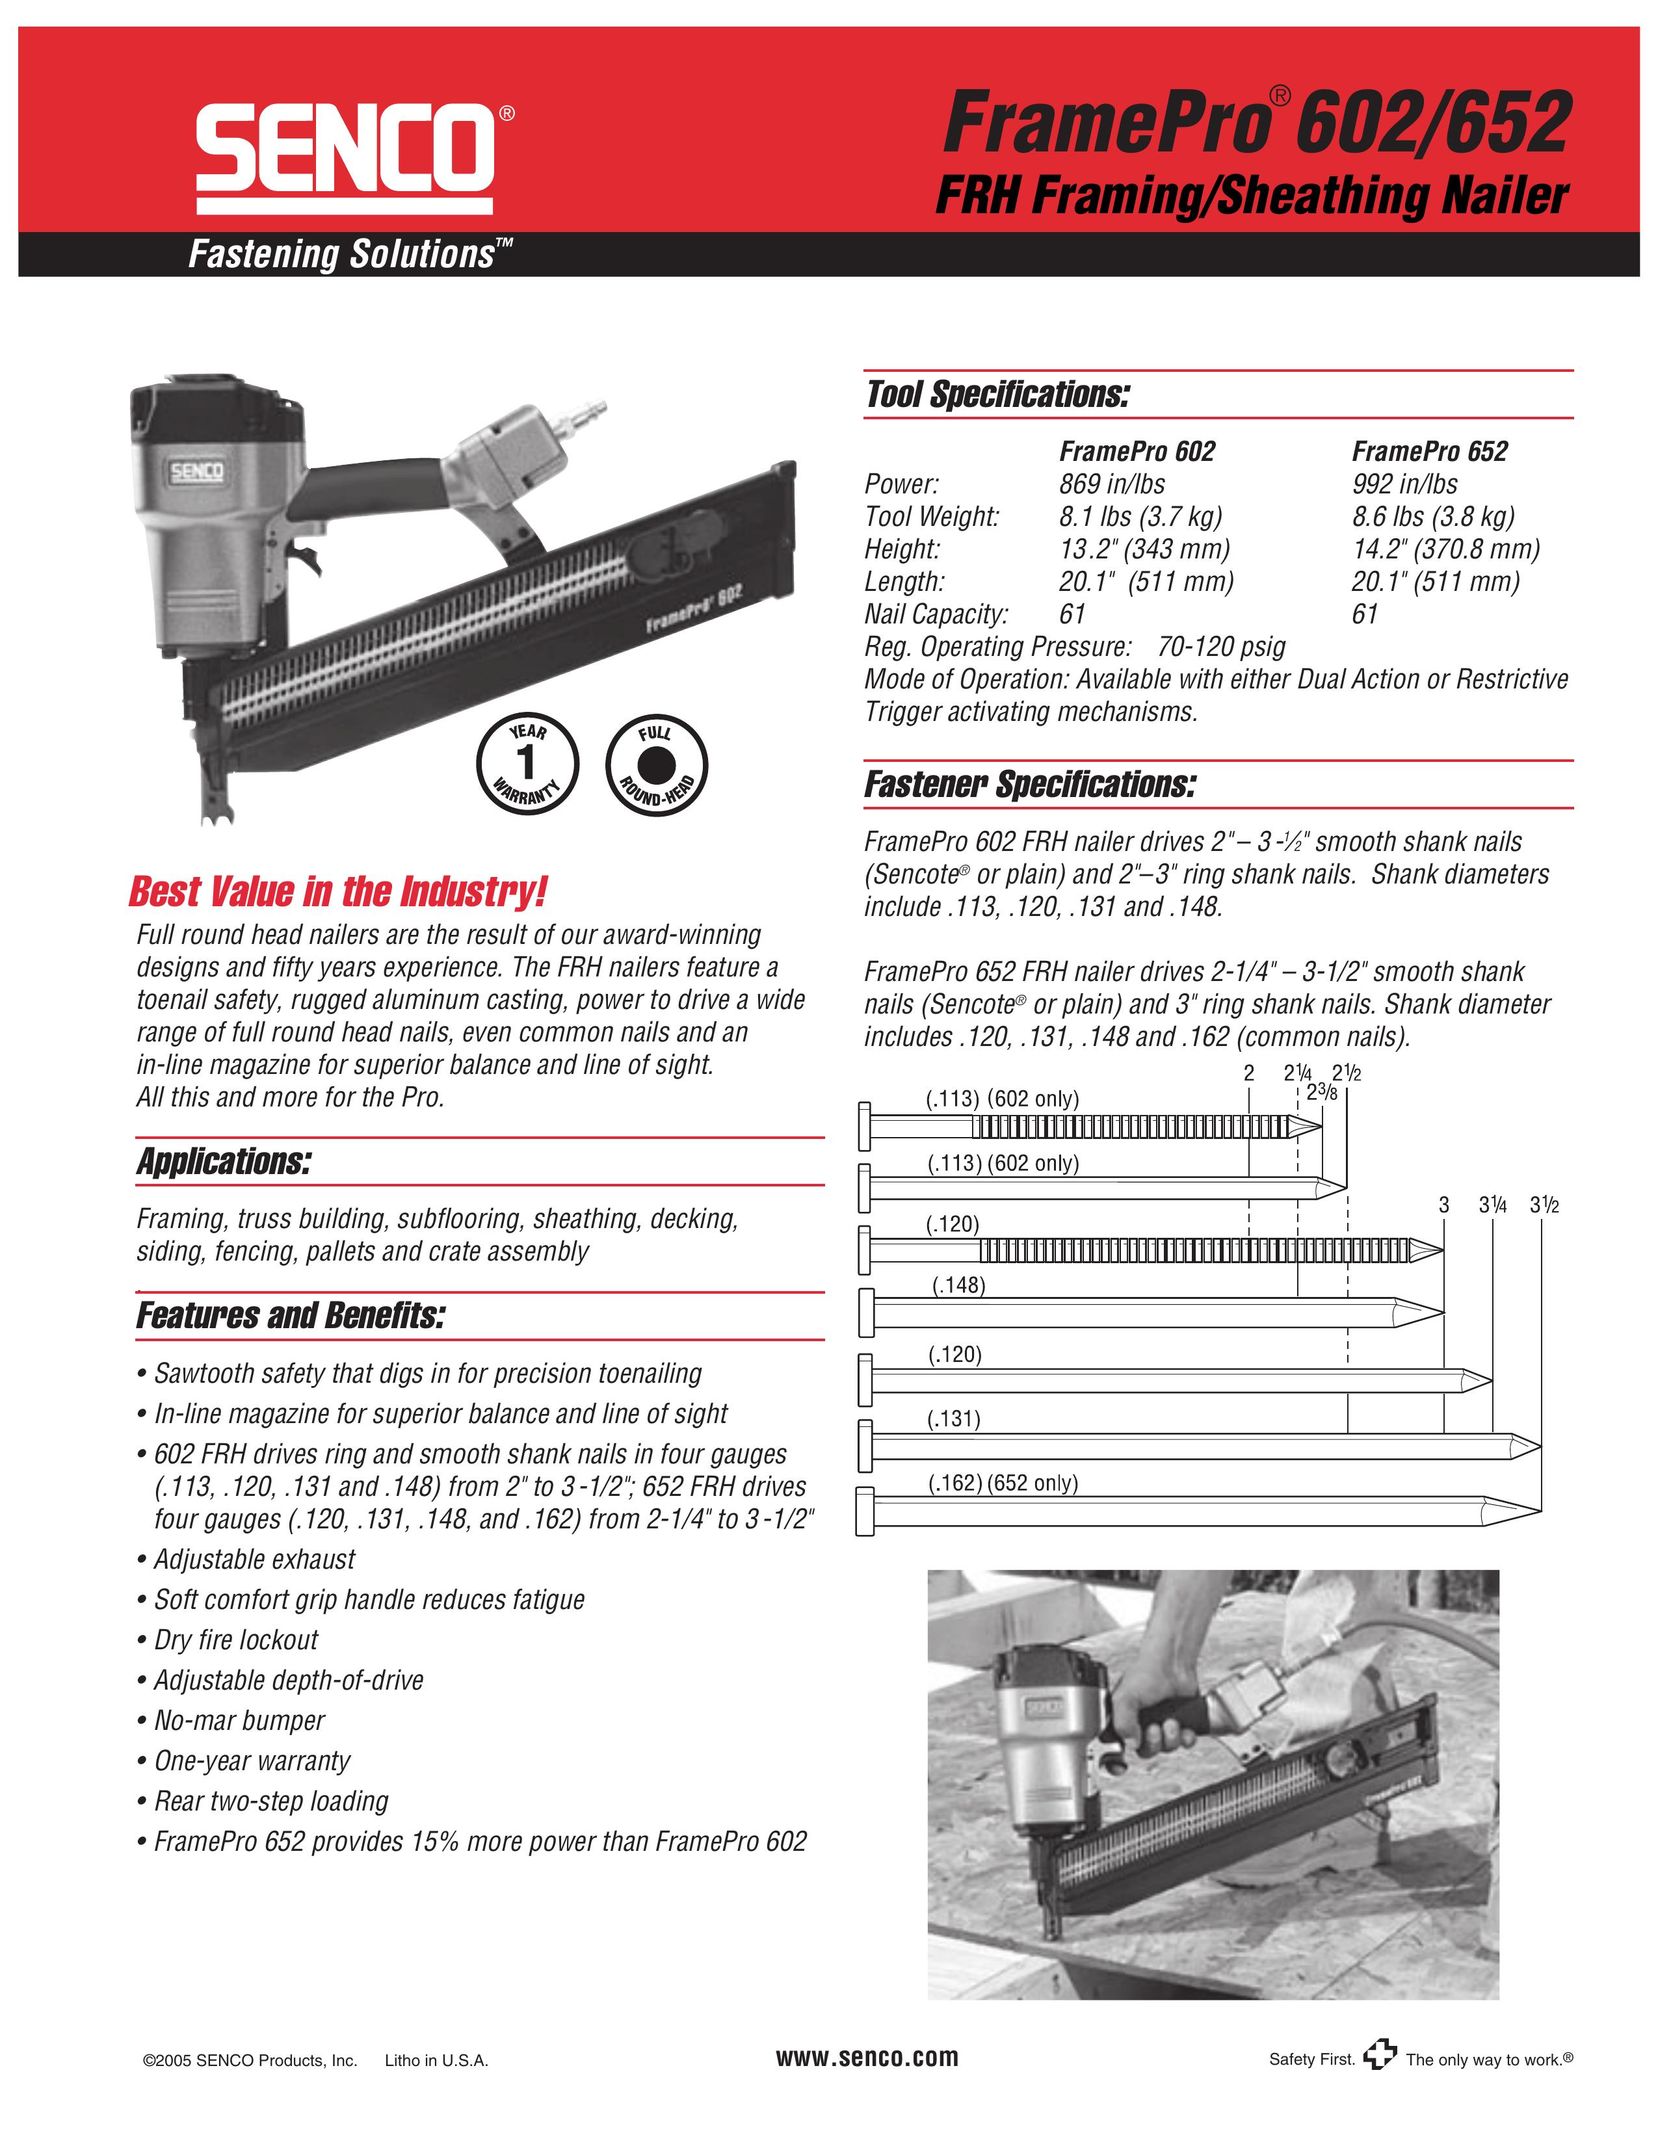 Senco FramePro 652 Nail Gun User Manual